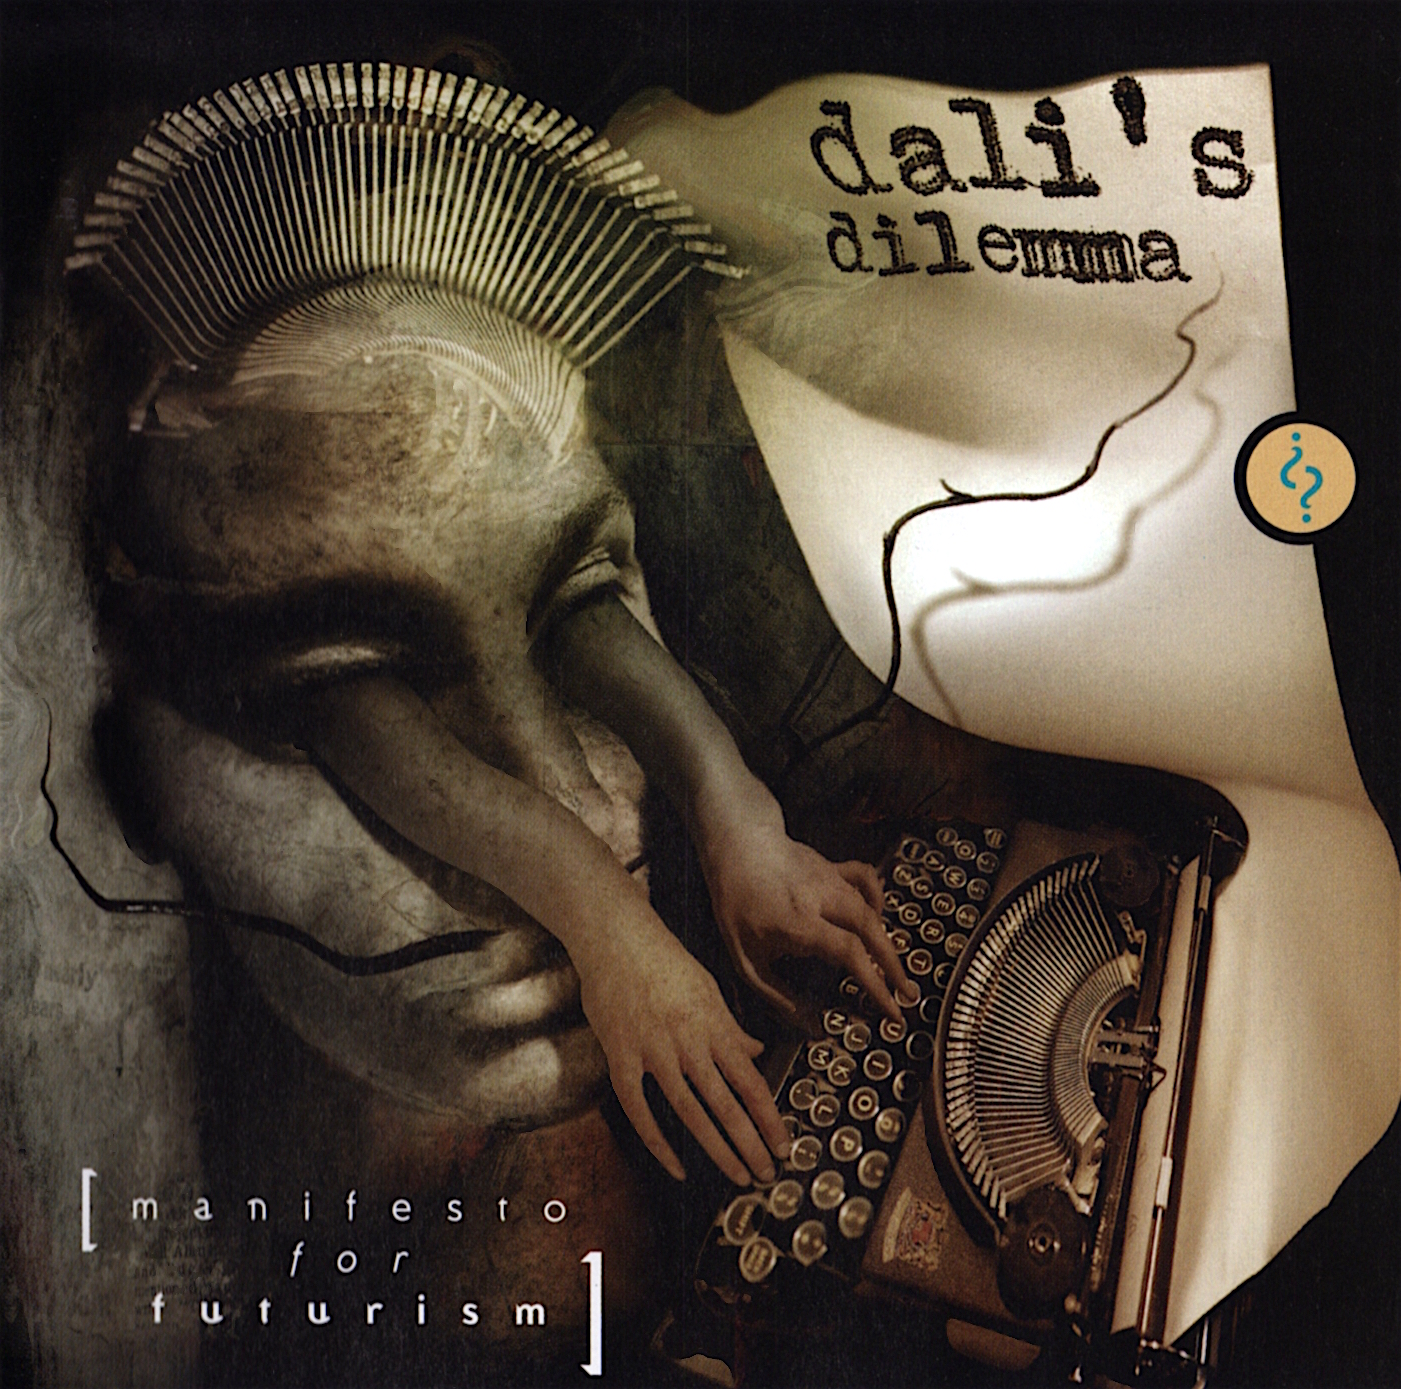 DALI'S DILEMMA - Manifesto For Futurism cover 